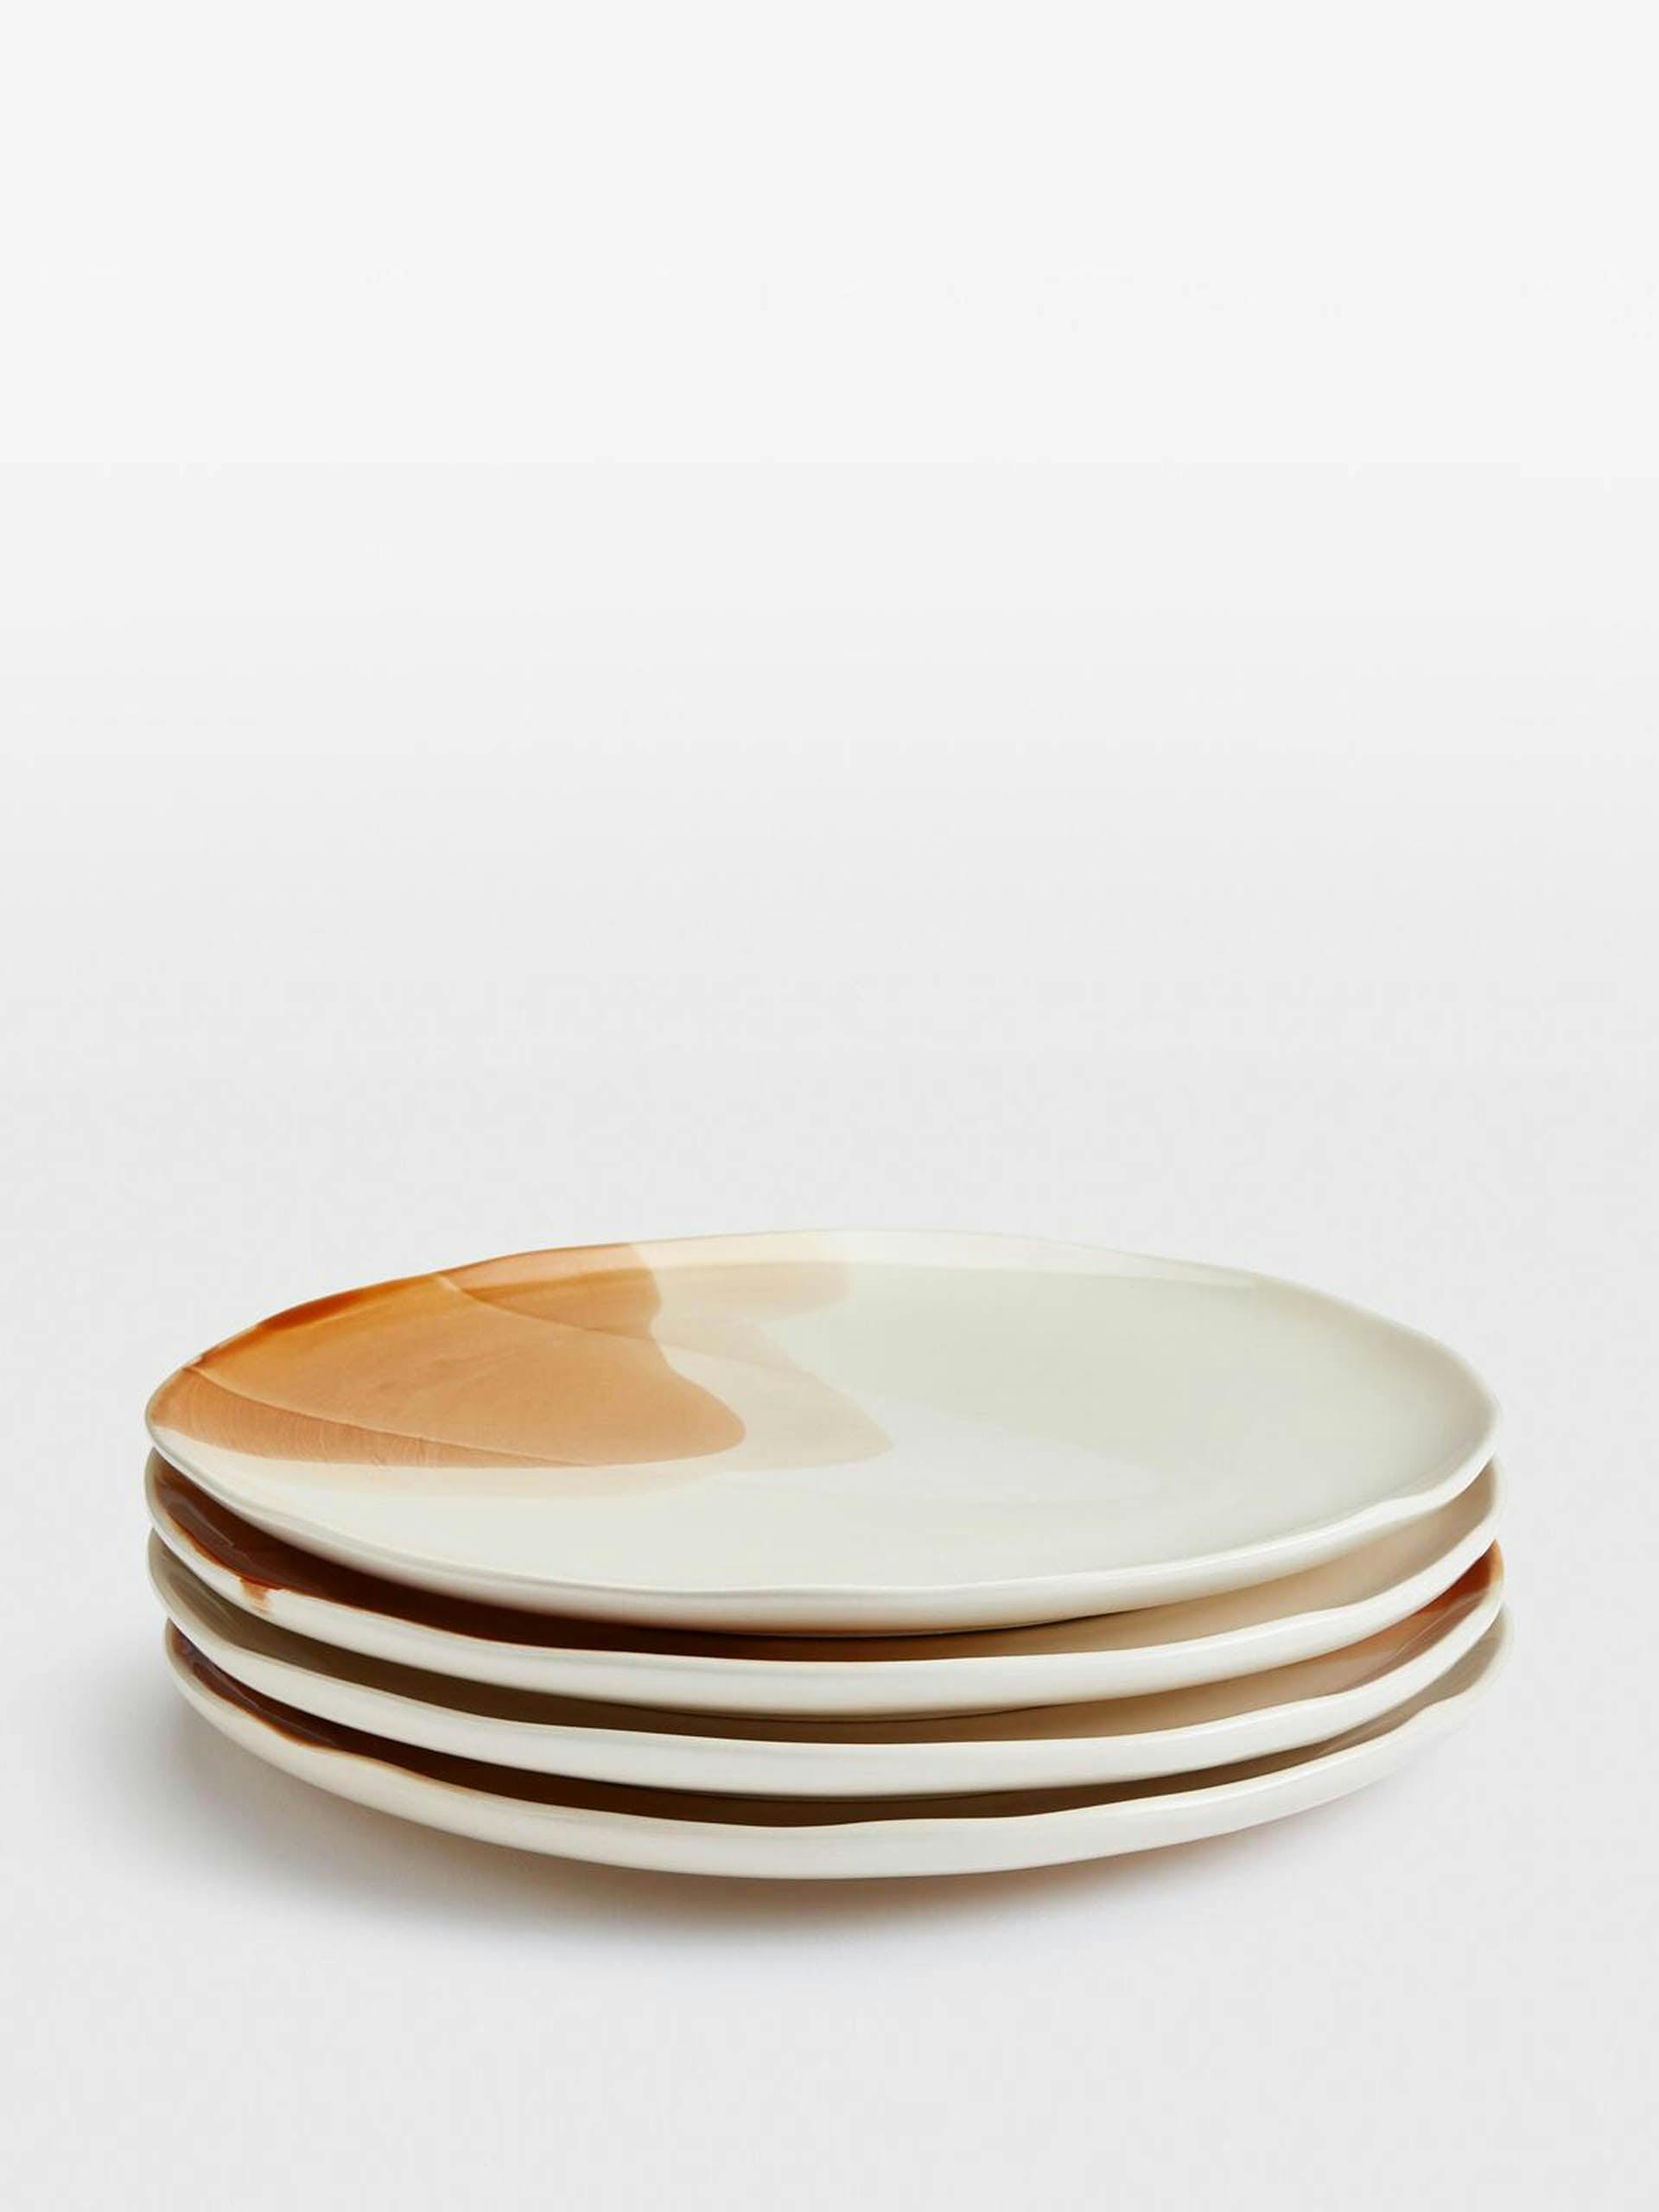 Delano Collection ceramic side plates (set of 4)